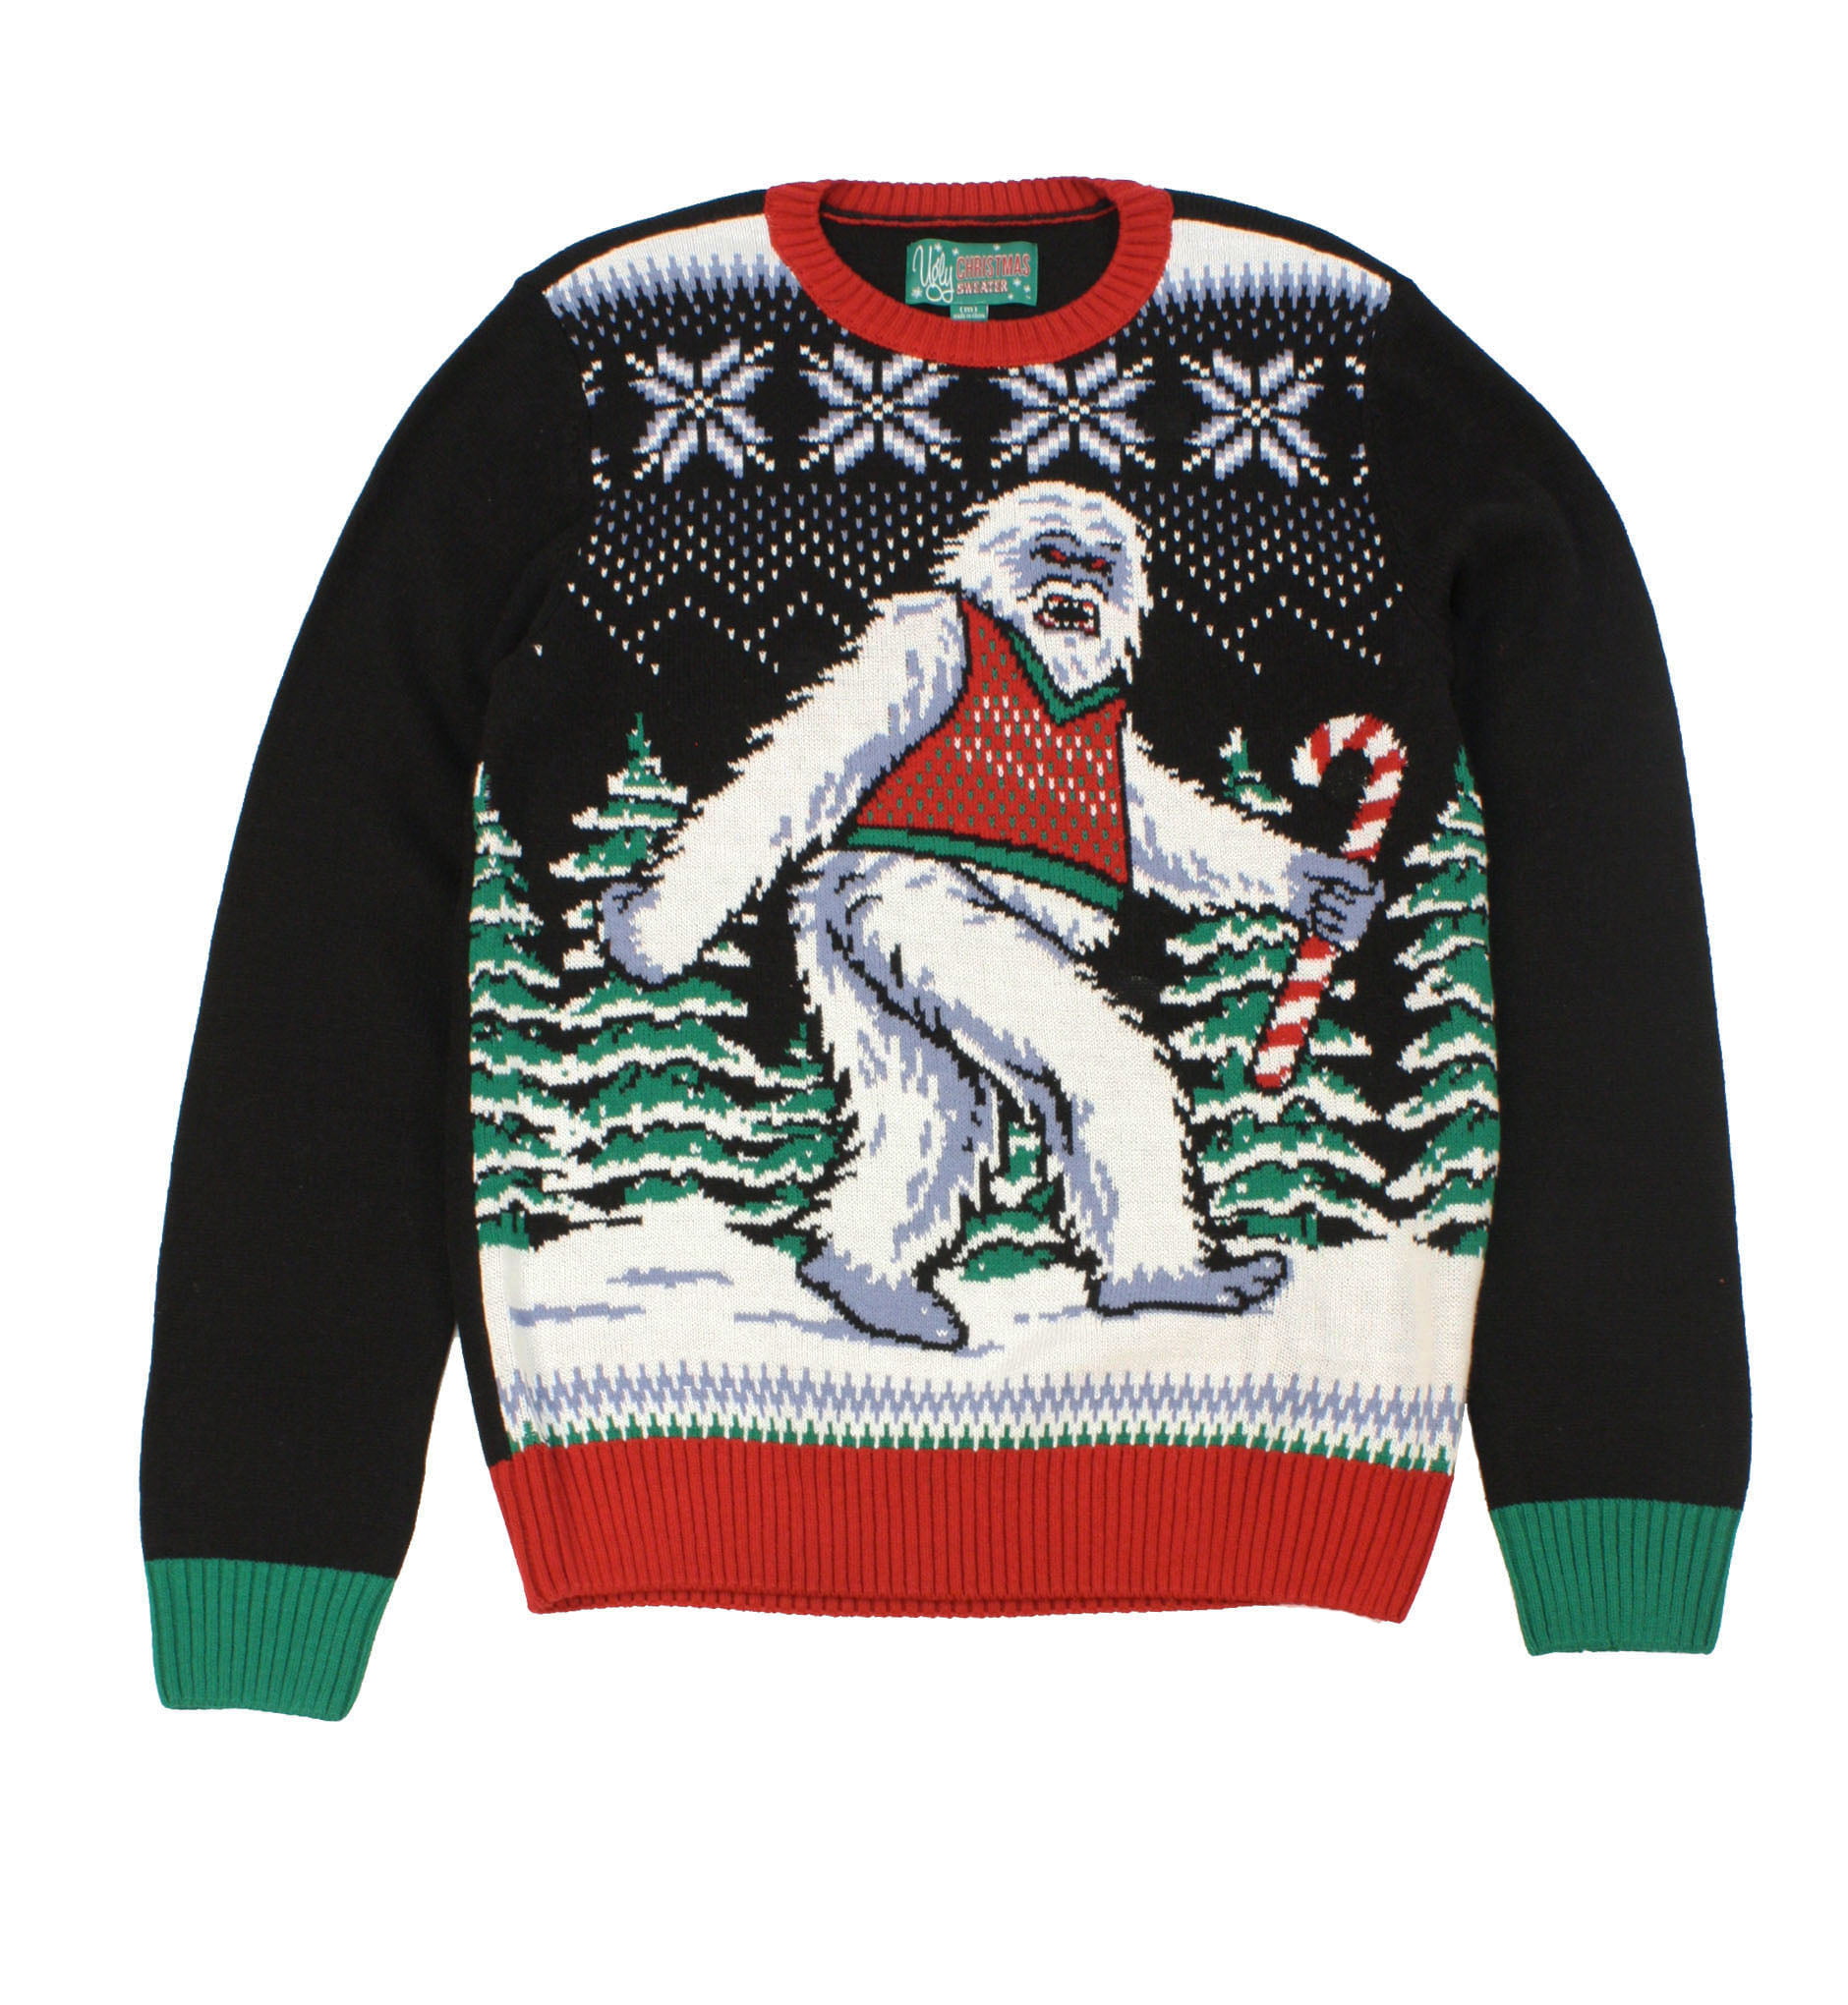 walmart christmas sweater plus size